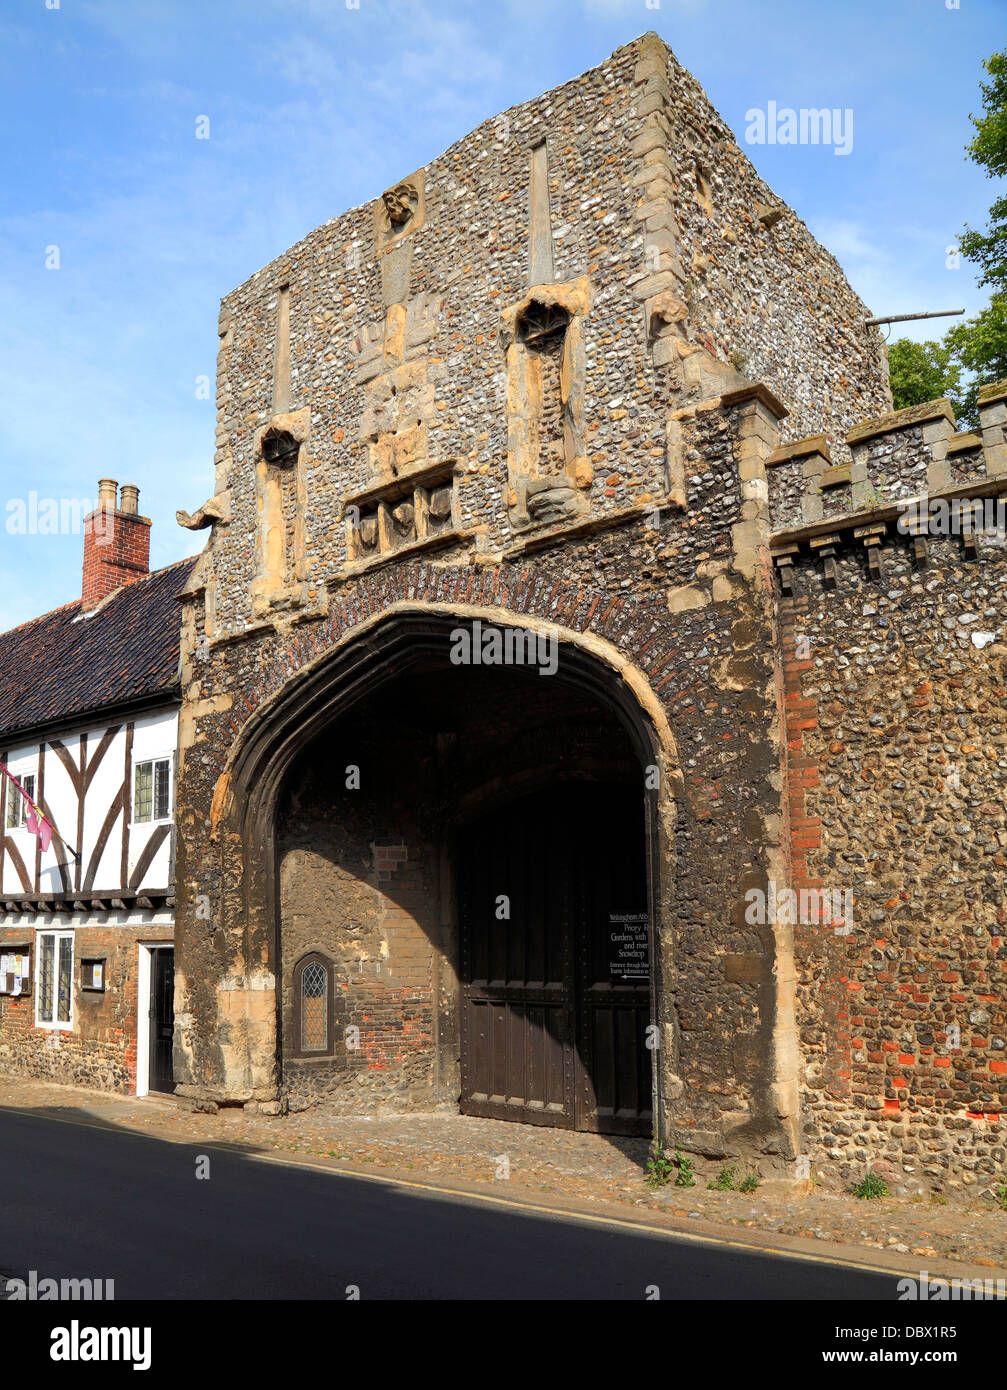 Walsingham Norfolk, Priory Abbey Gatehouse, High Street, xv secolo architettura inglese, England Regno Unito, abbazie priorati Foto Stock